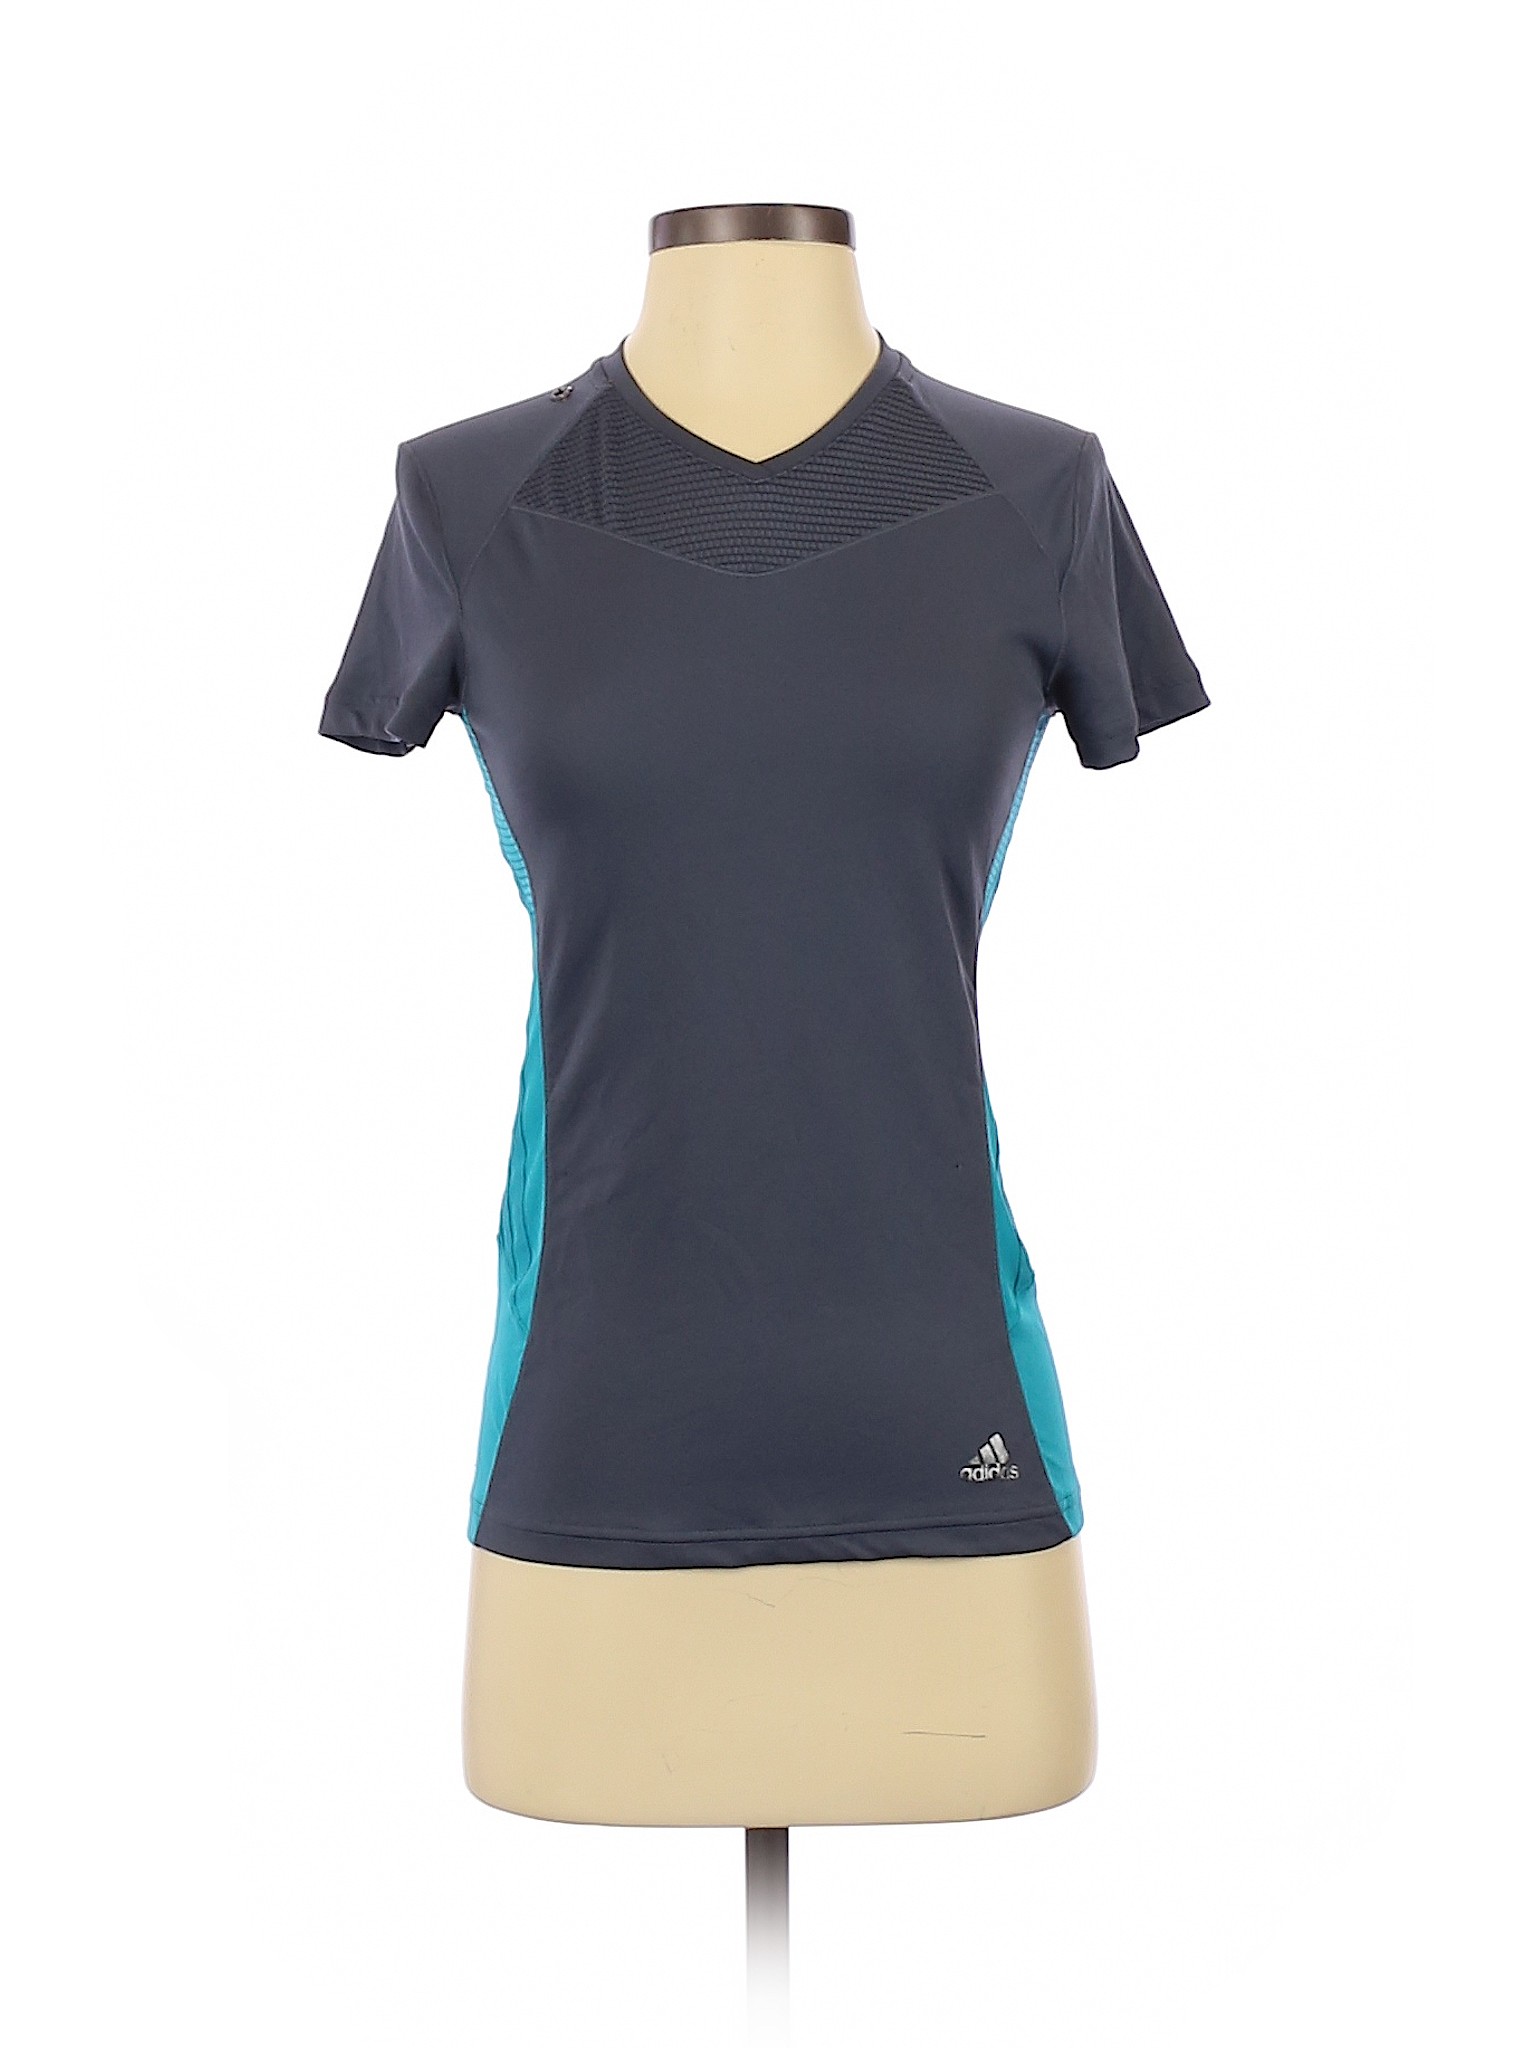 Adidas Women Gray Active T-Shirt S | eBay